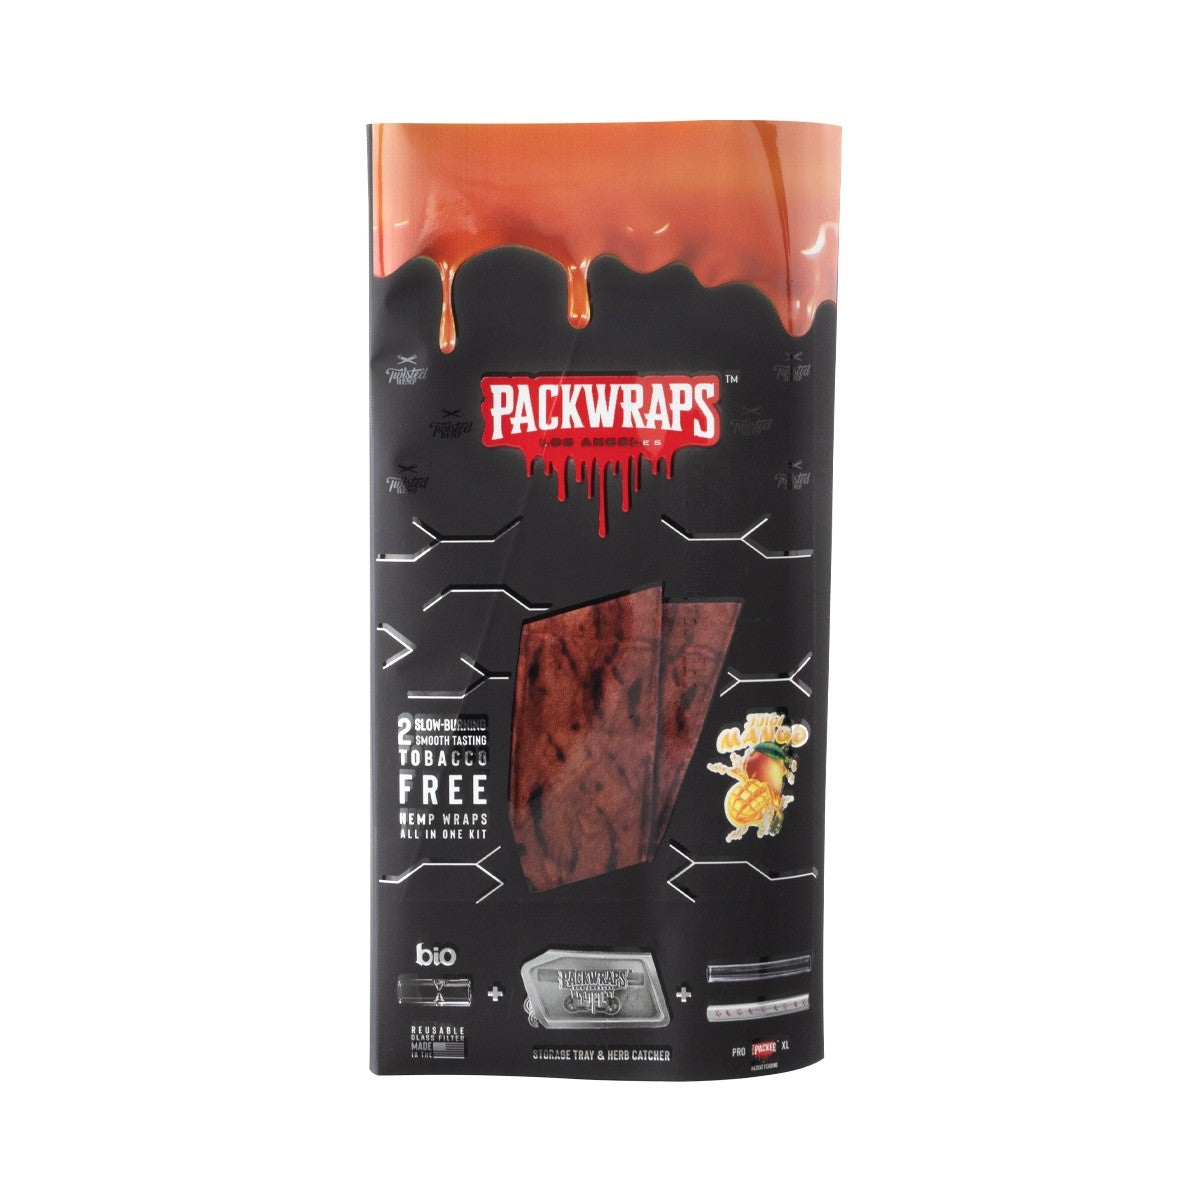 PACKWRAPS - Juicy Mango Hemp Wraps Kit